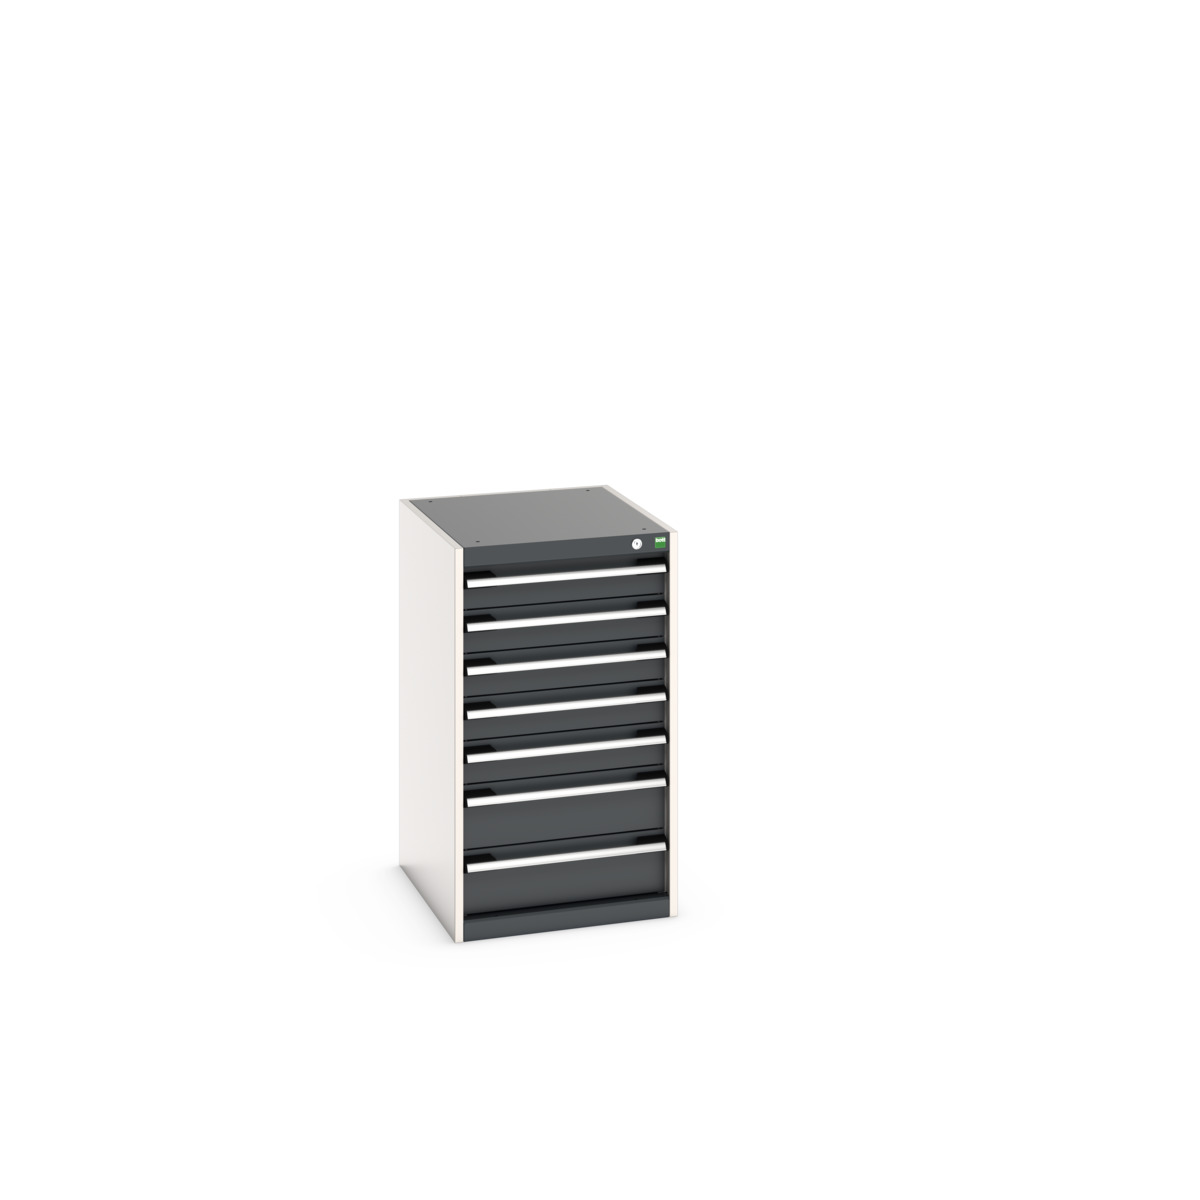 40018051. - cubio drawer cabinet